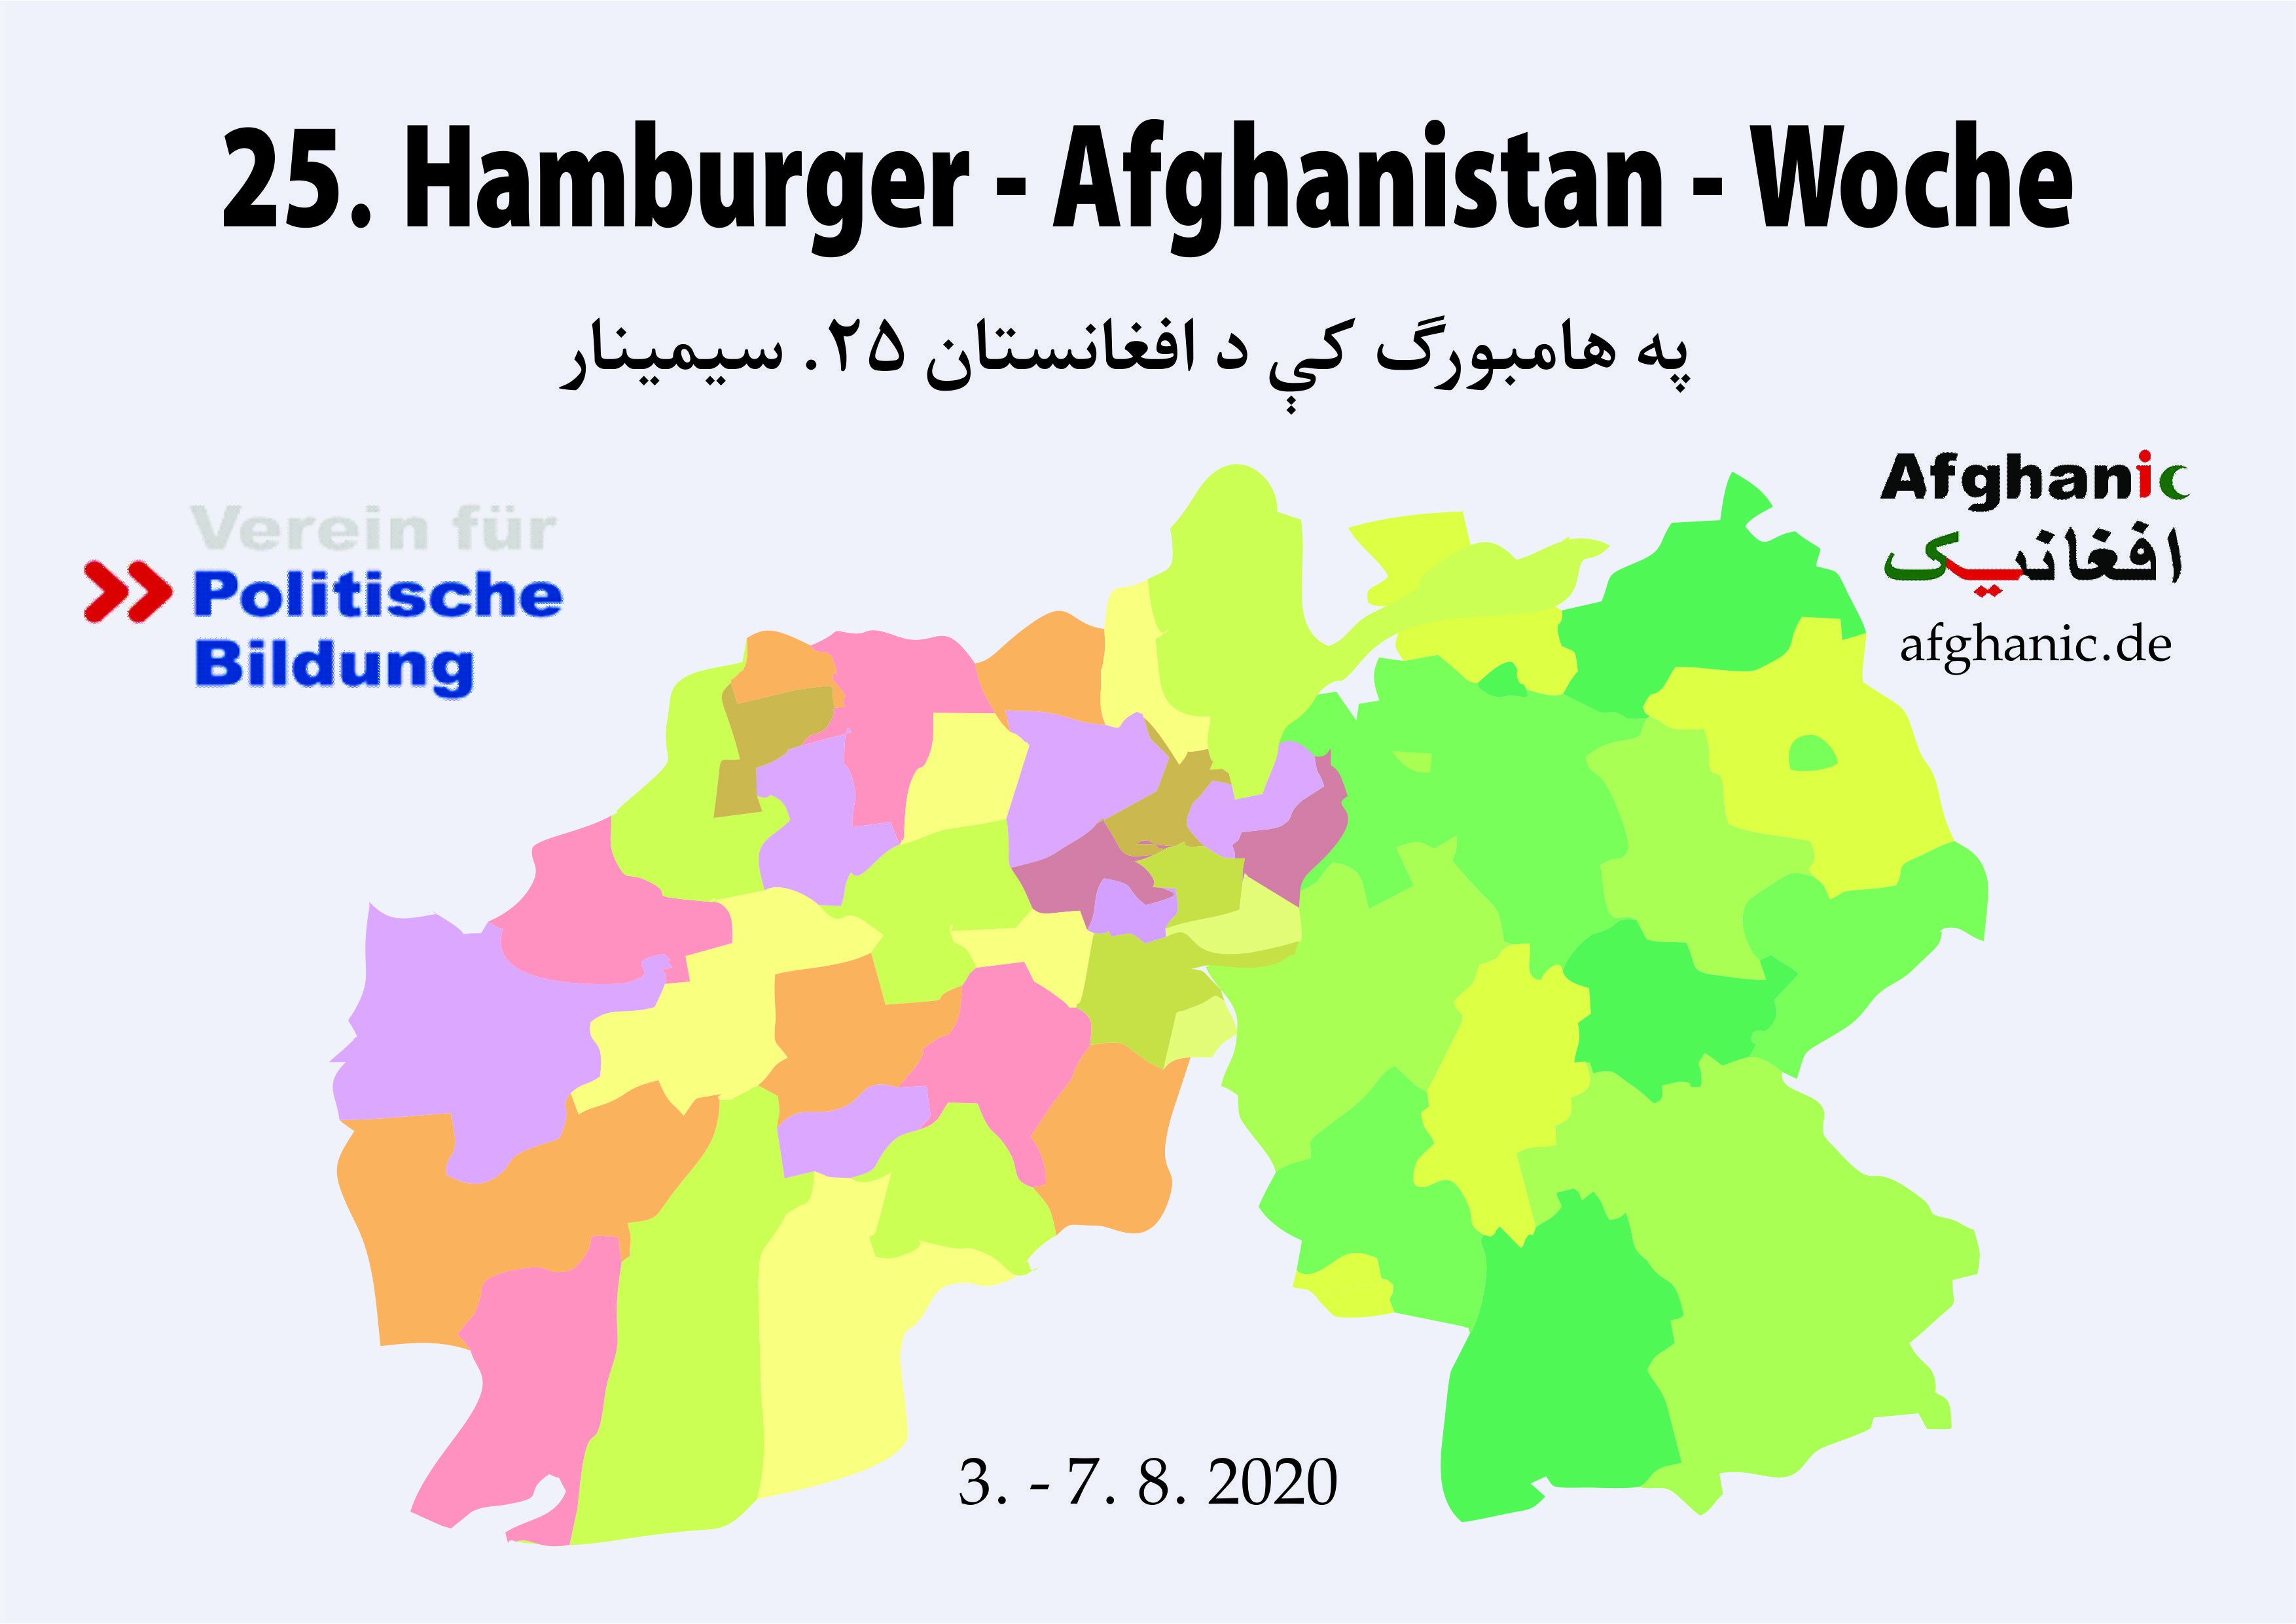 25. Hamburger-Afghanistan-Woche: 3.-7.8.2020